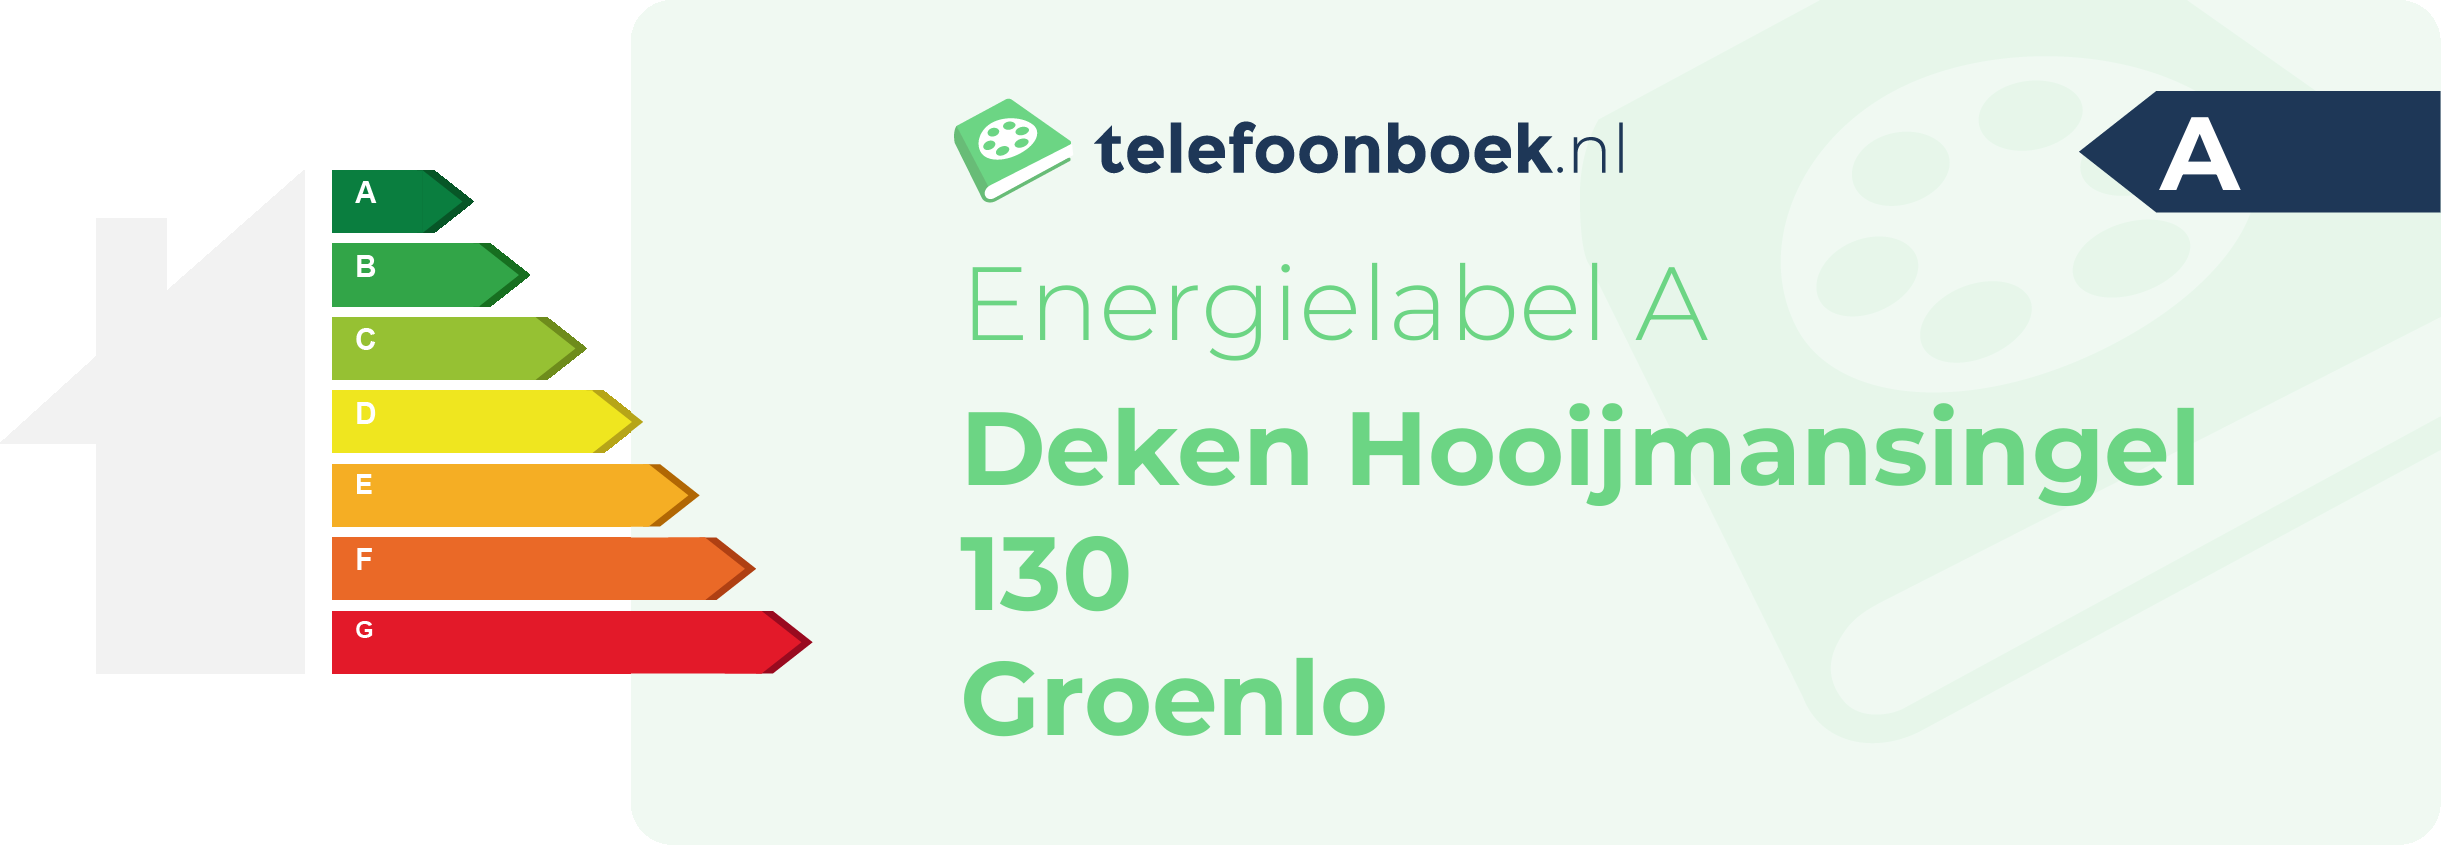 Energielabel Deken Hooijmansingel 130 Groenlo